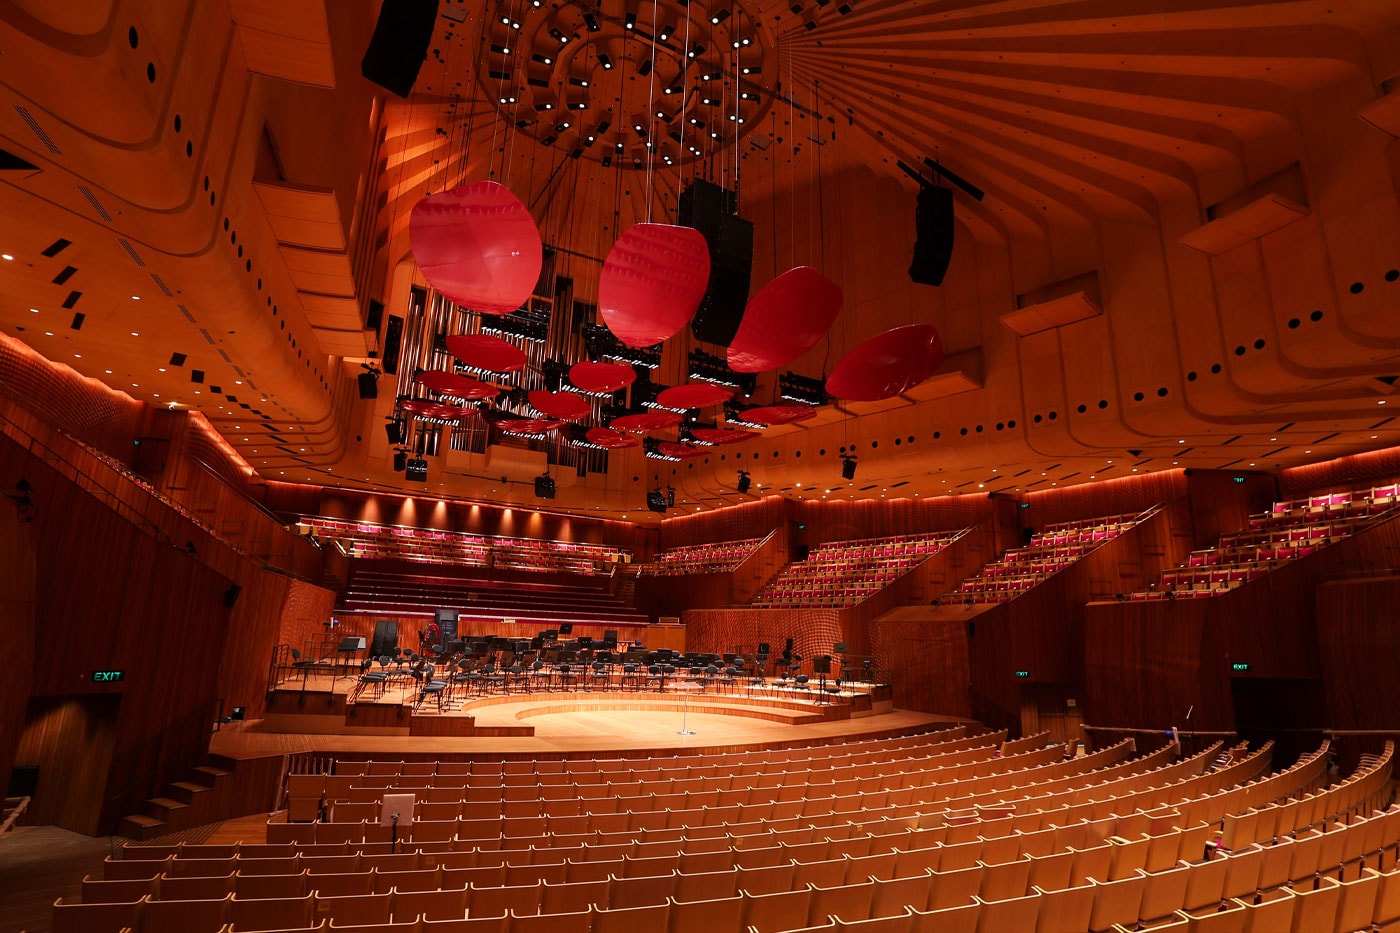 Newly Renovated Sydney Opera House Concert Hall Inside Look decade renewal renovations 18 petals lift reveal info 